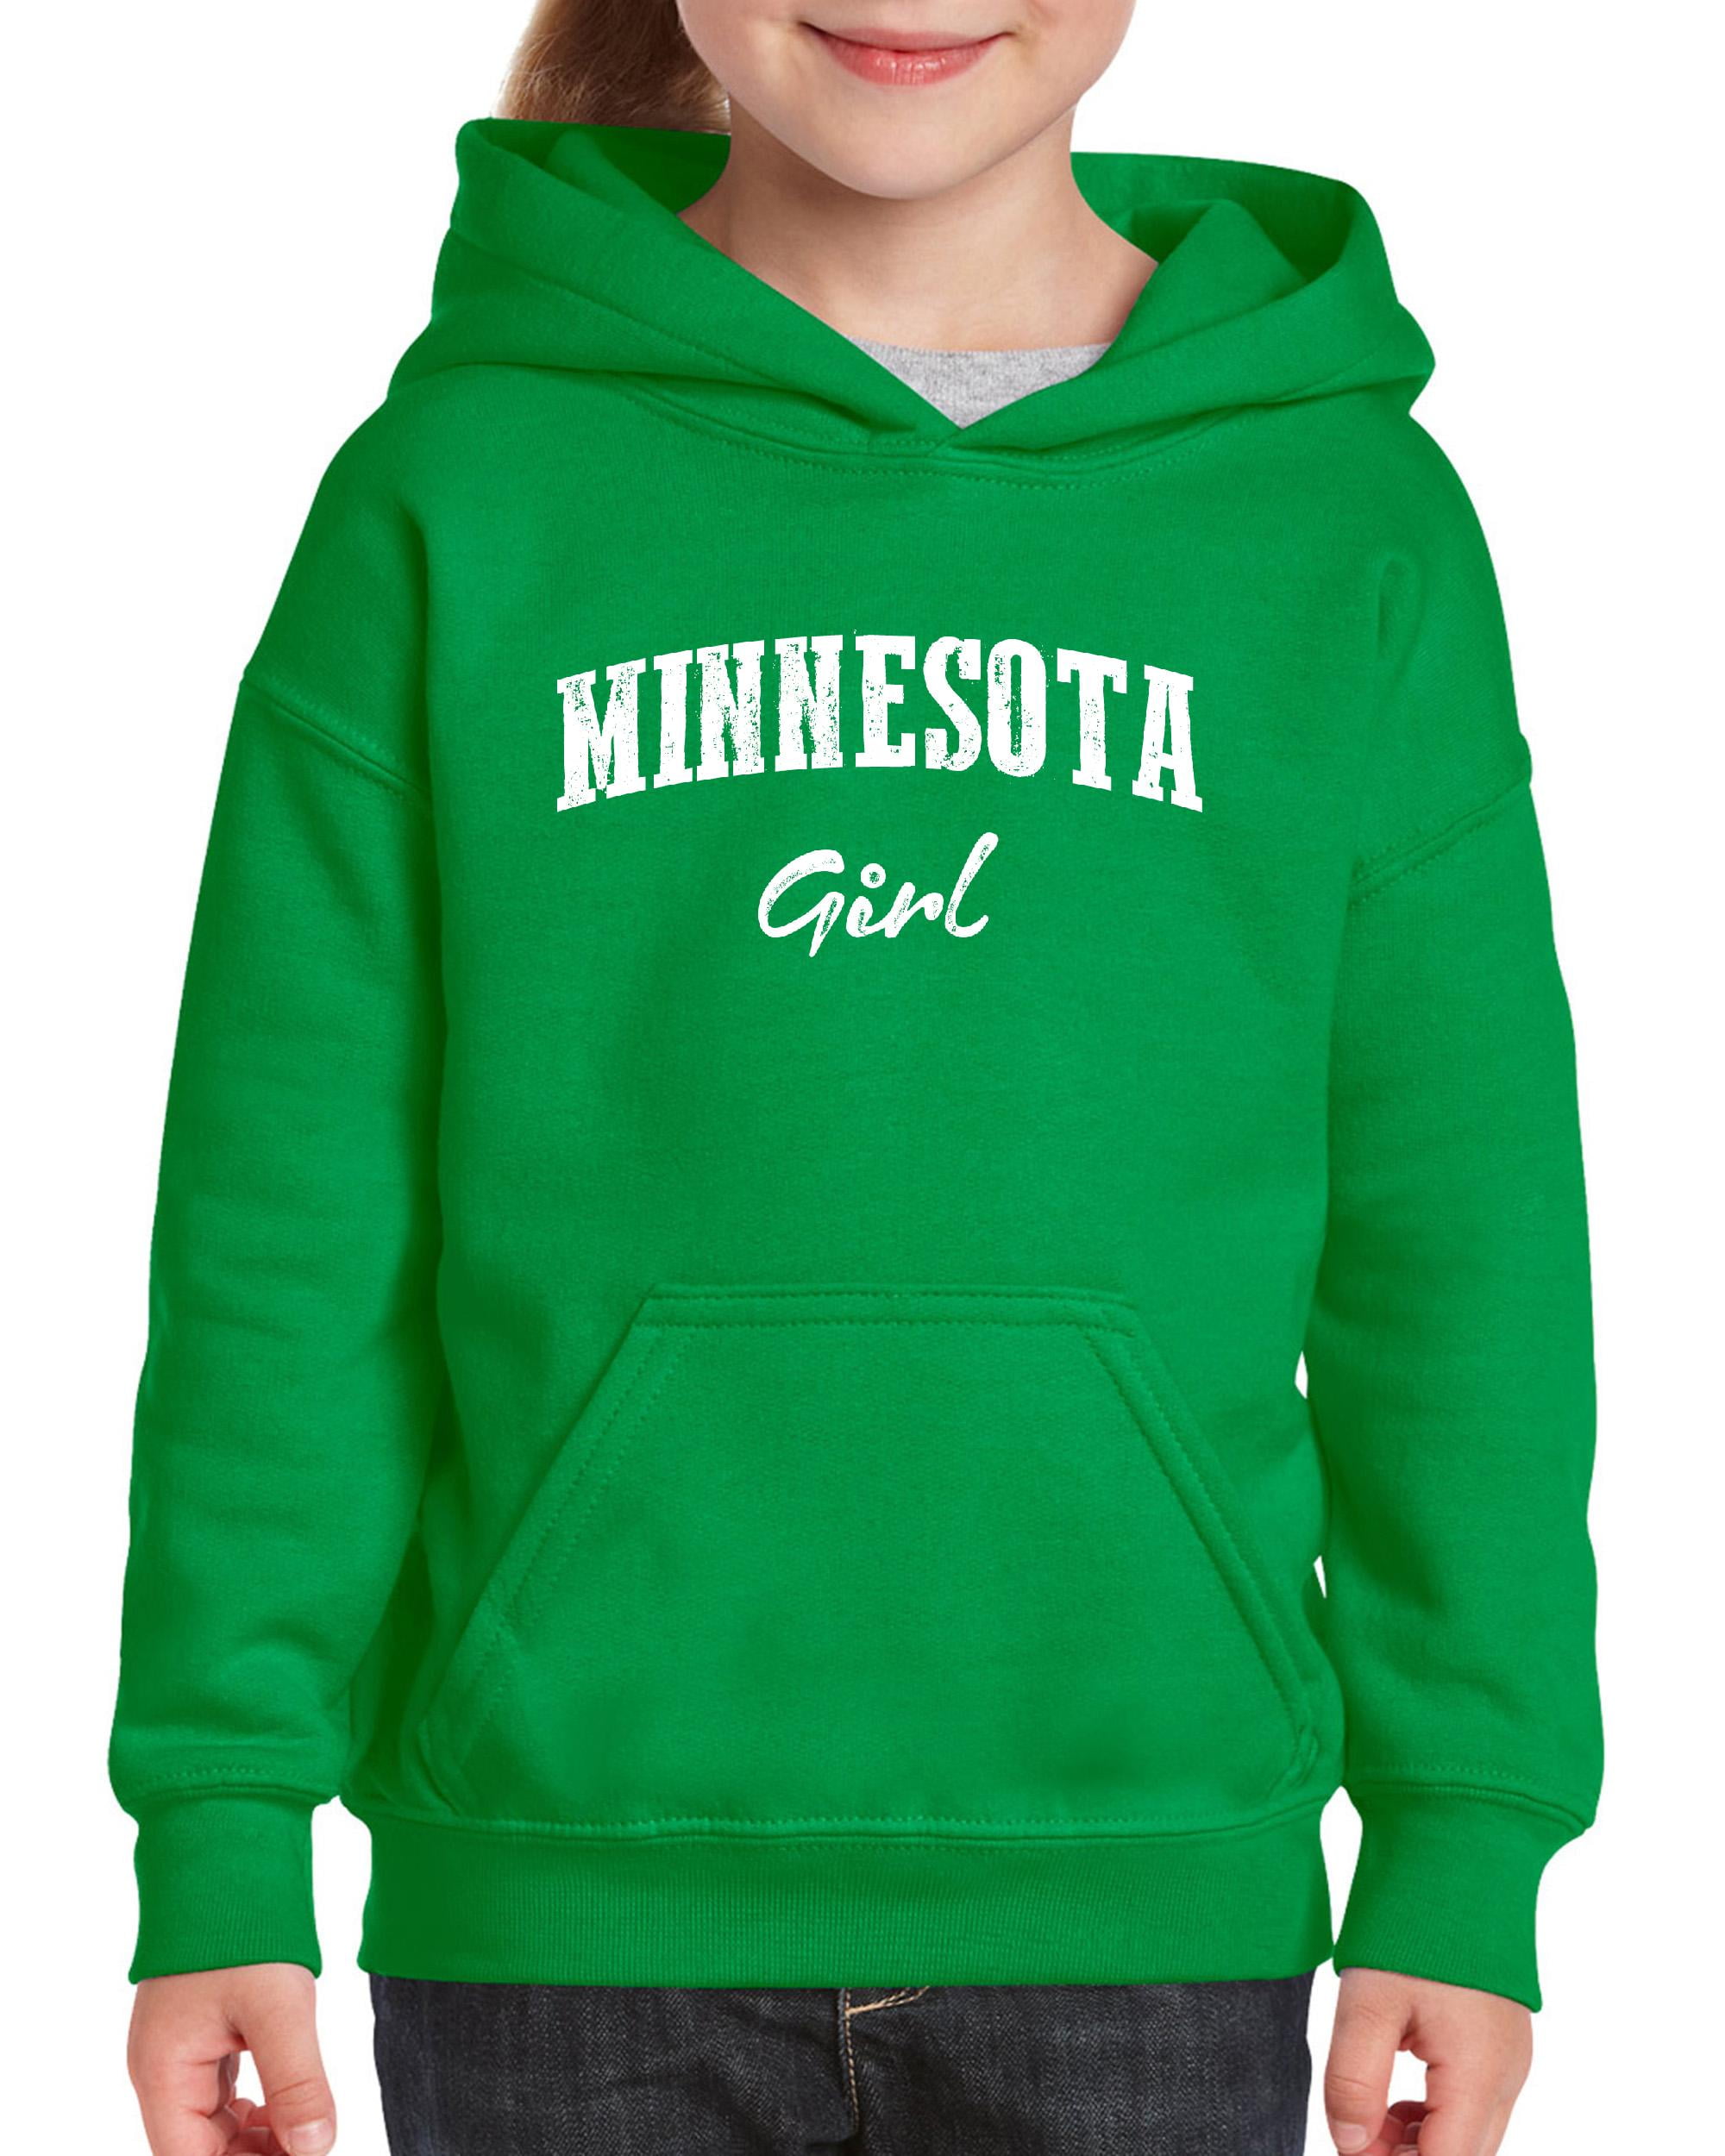 NIB - Big Boys Hoodies and Sweatshirts - Minnesota Girl - Walmart.com